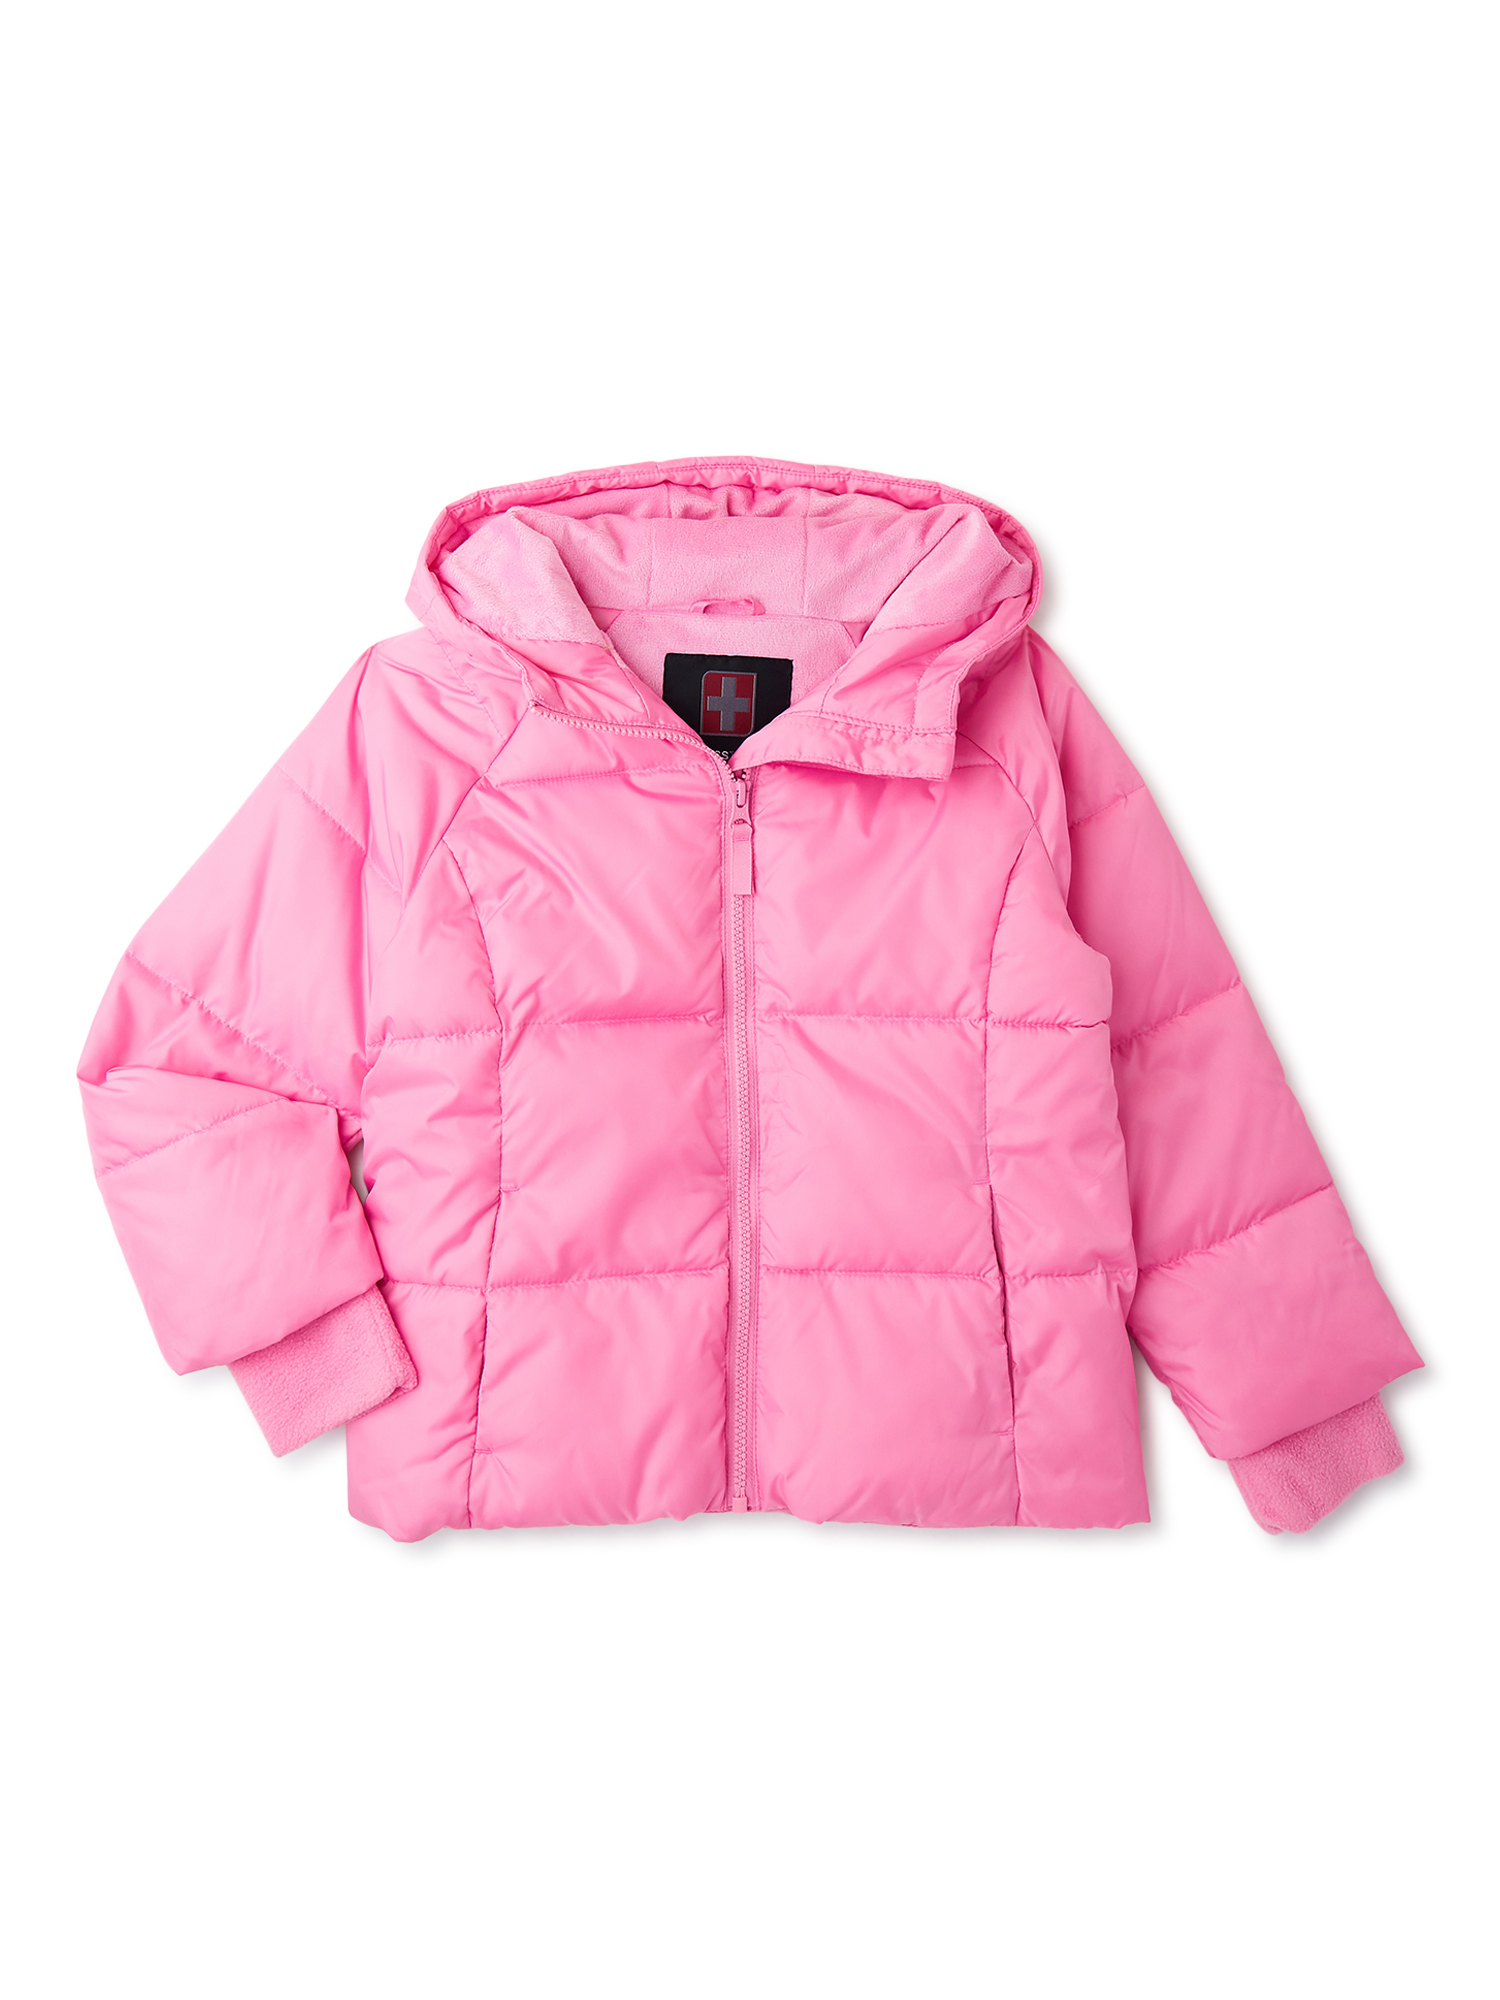 Swiss Tech Girls Winter Puffer Jacket with Hood, Sizes 4-18 & Plus - image 1 of 4